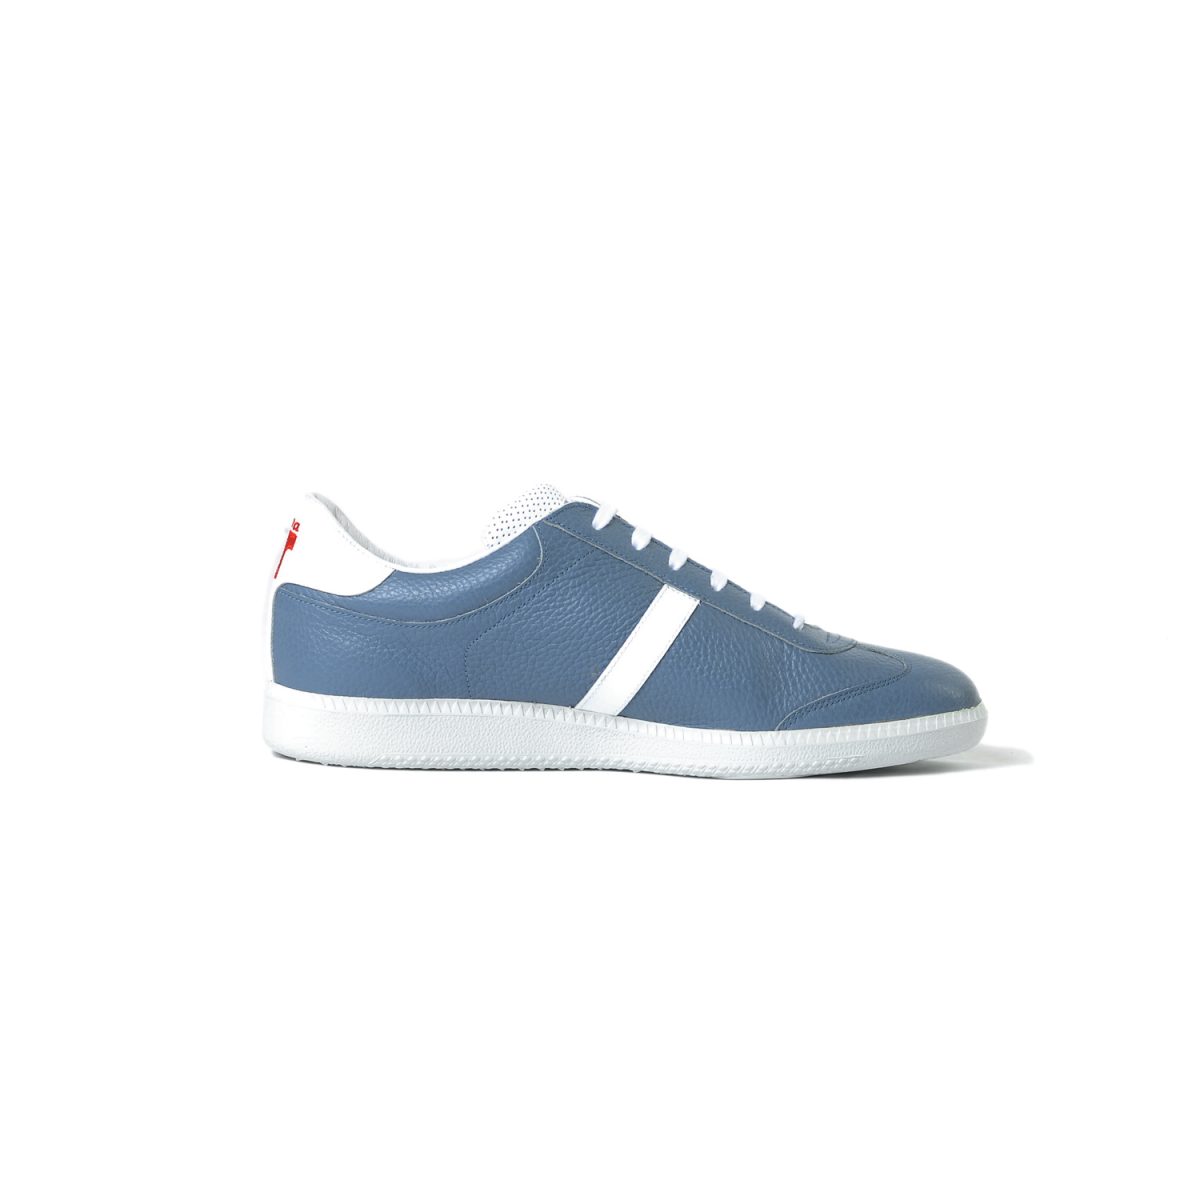 Tisza shoes - Compakt - Steel blue-white